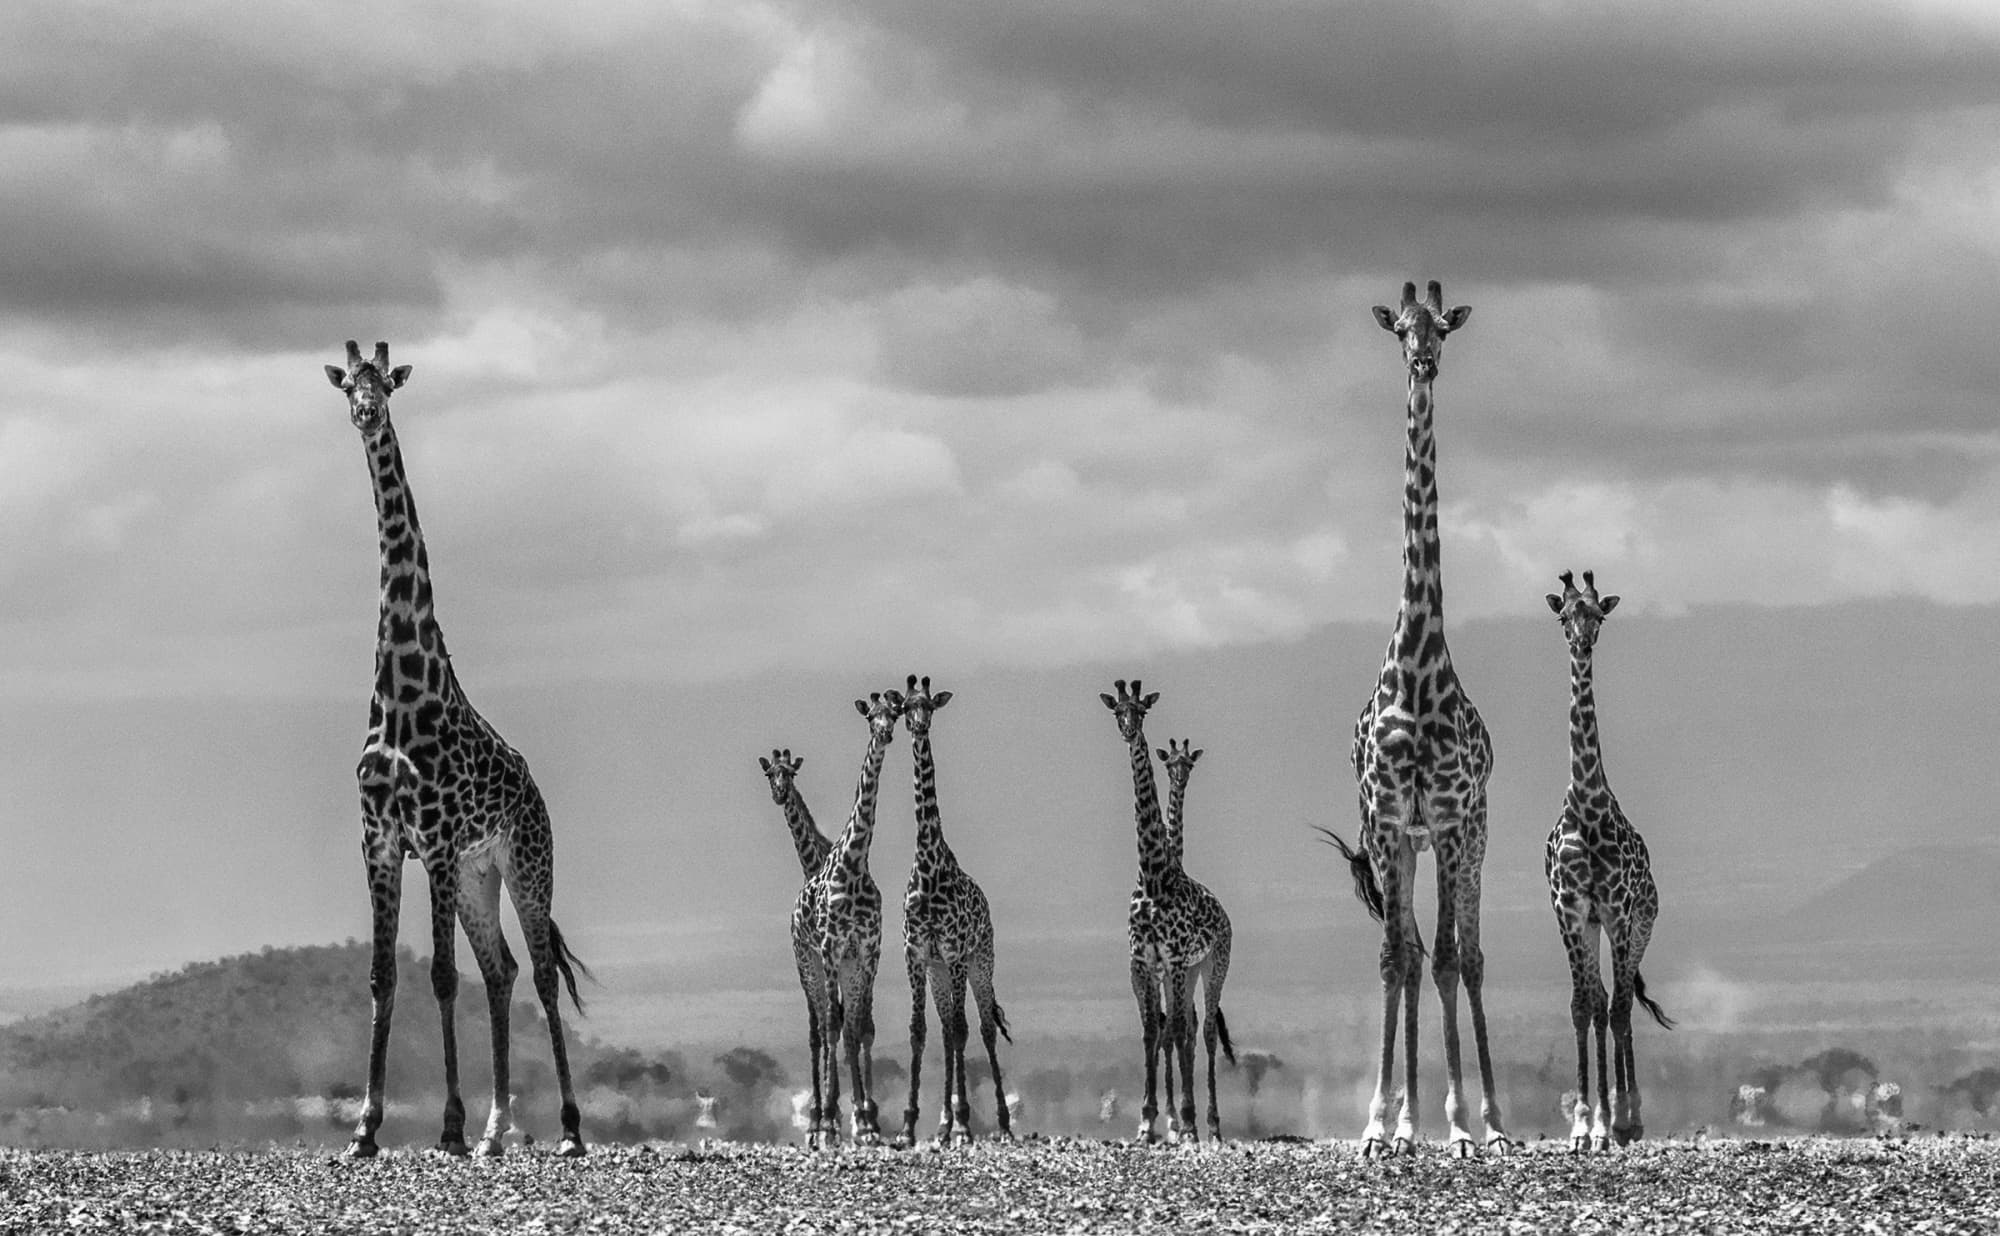 Giraffe City by David Yarrow